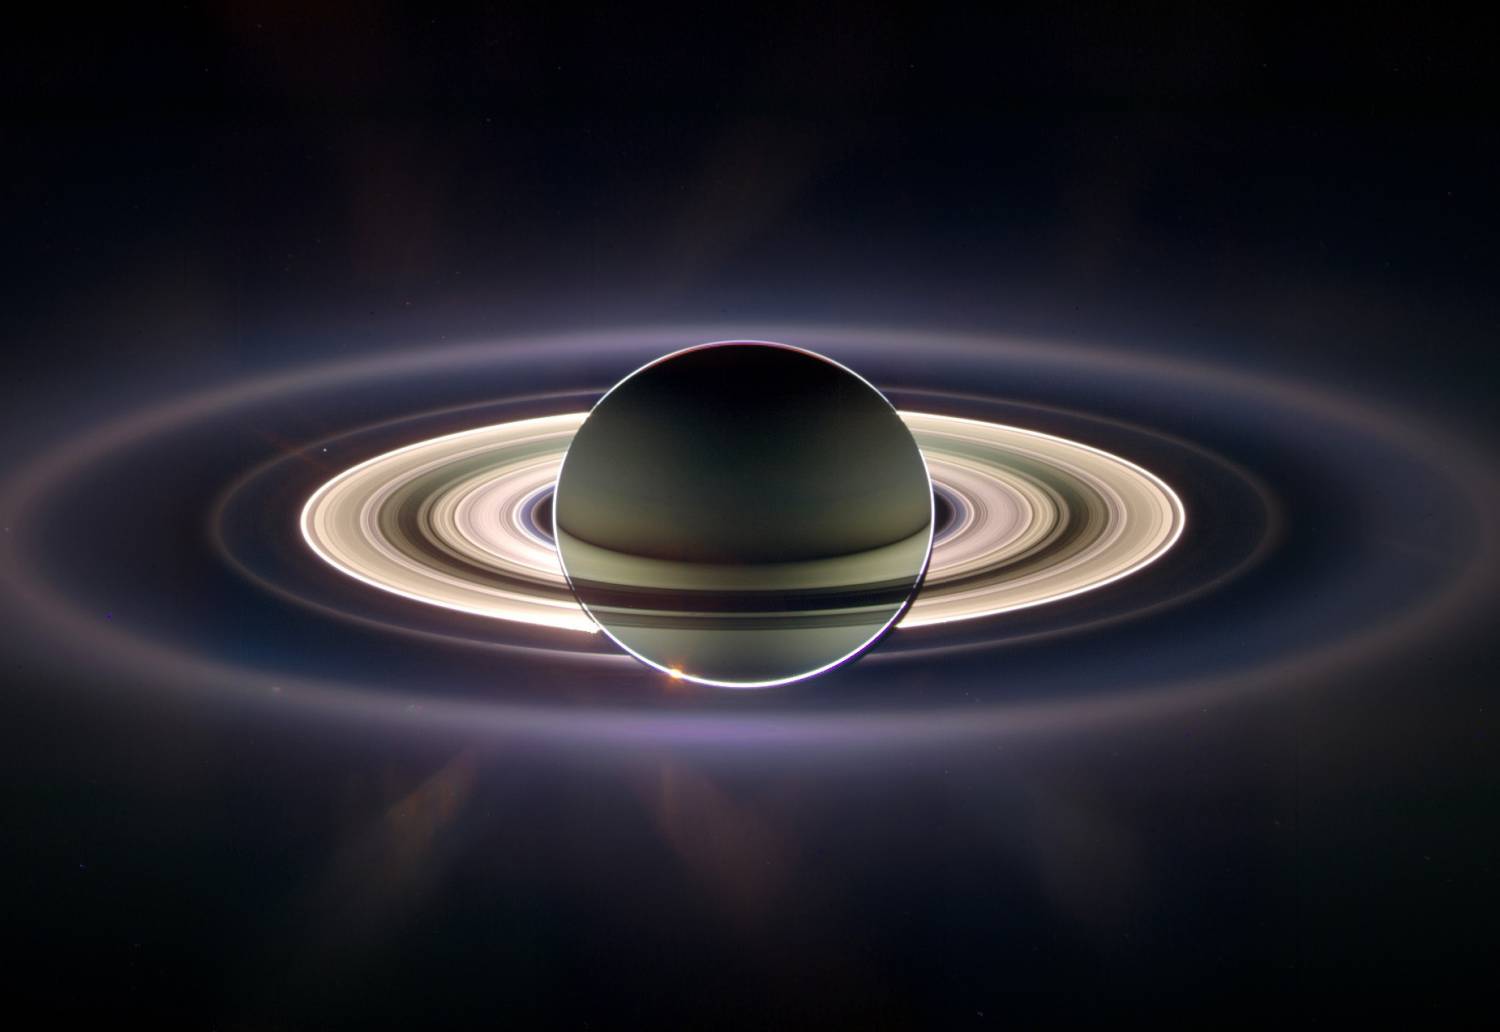 Сатурн Кассини. Сатурн (Планета). Кассини Сатурн солнце. Кольца Сатурна НАСА. Сатурн земная группа